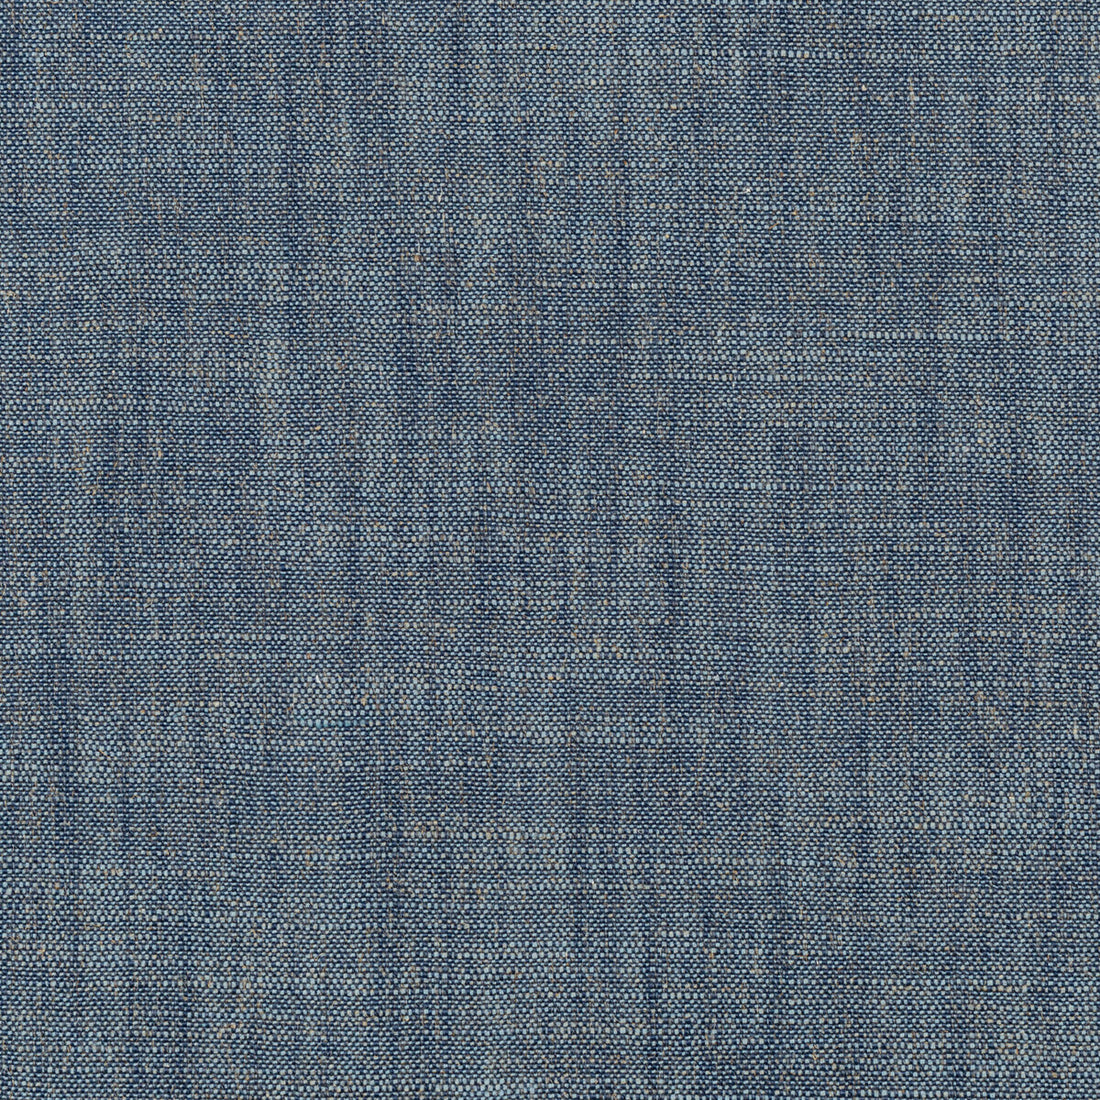 Kravet Smart fabric in 35941-5 color - pattern 35941.5.0 - by Kravet Smart in the Performance Kravetarmor collection